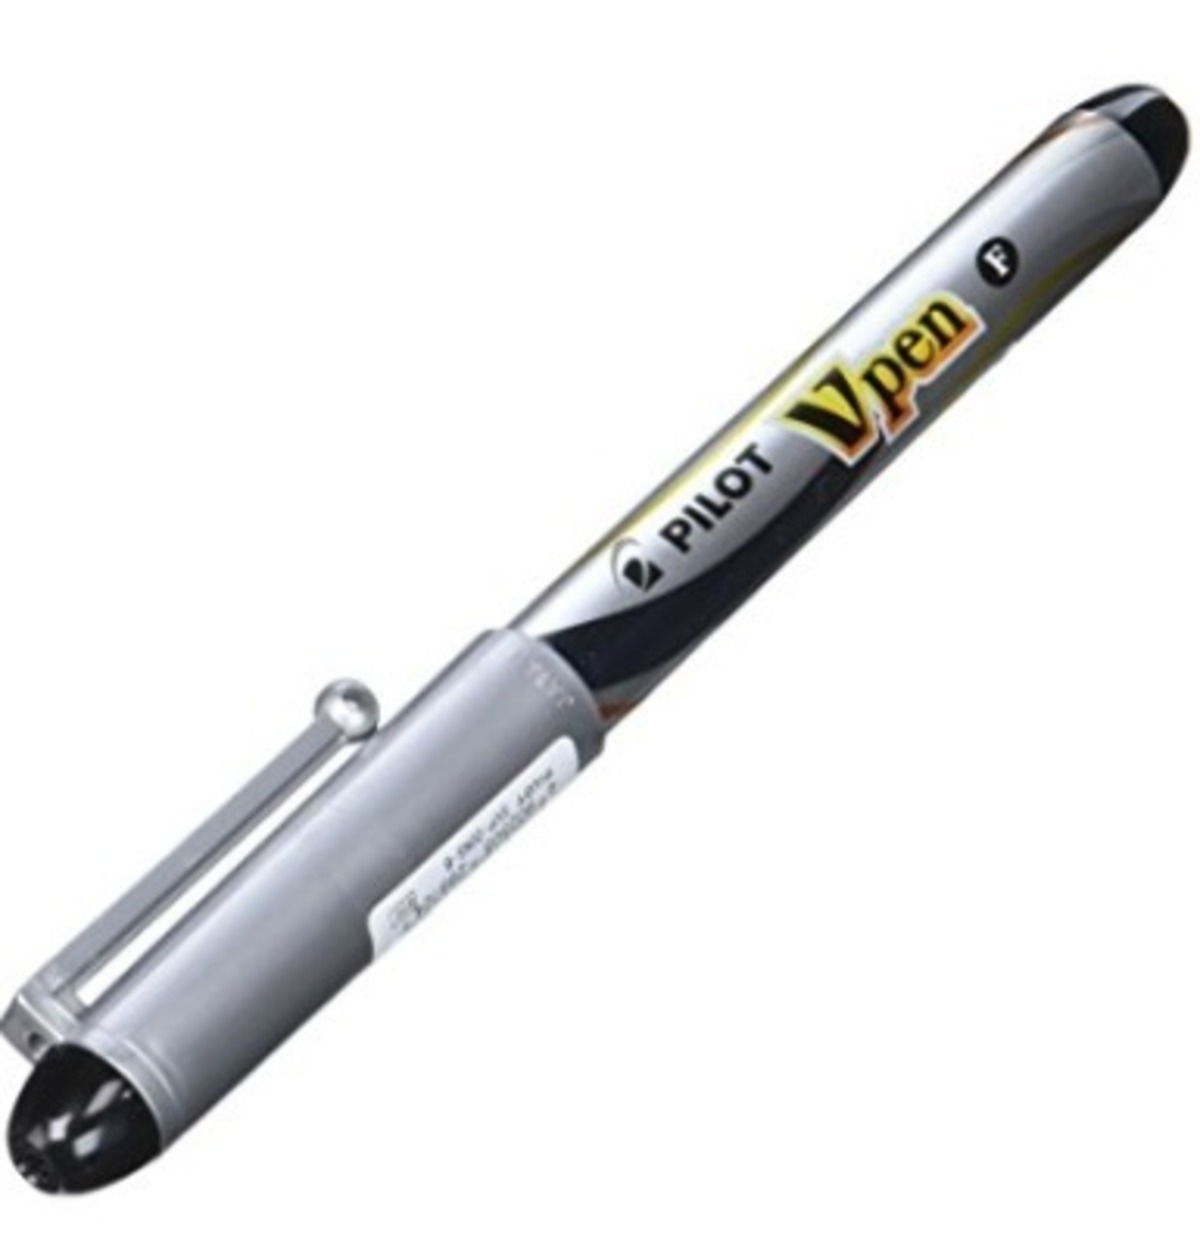 Pilot Frixion Ball Knock Retractable Gel Ink Pen - 0.5mm, 10 Colors